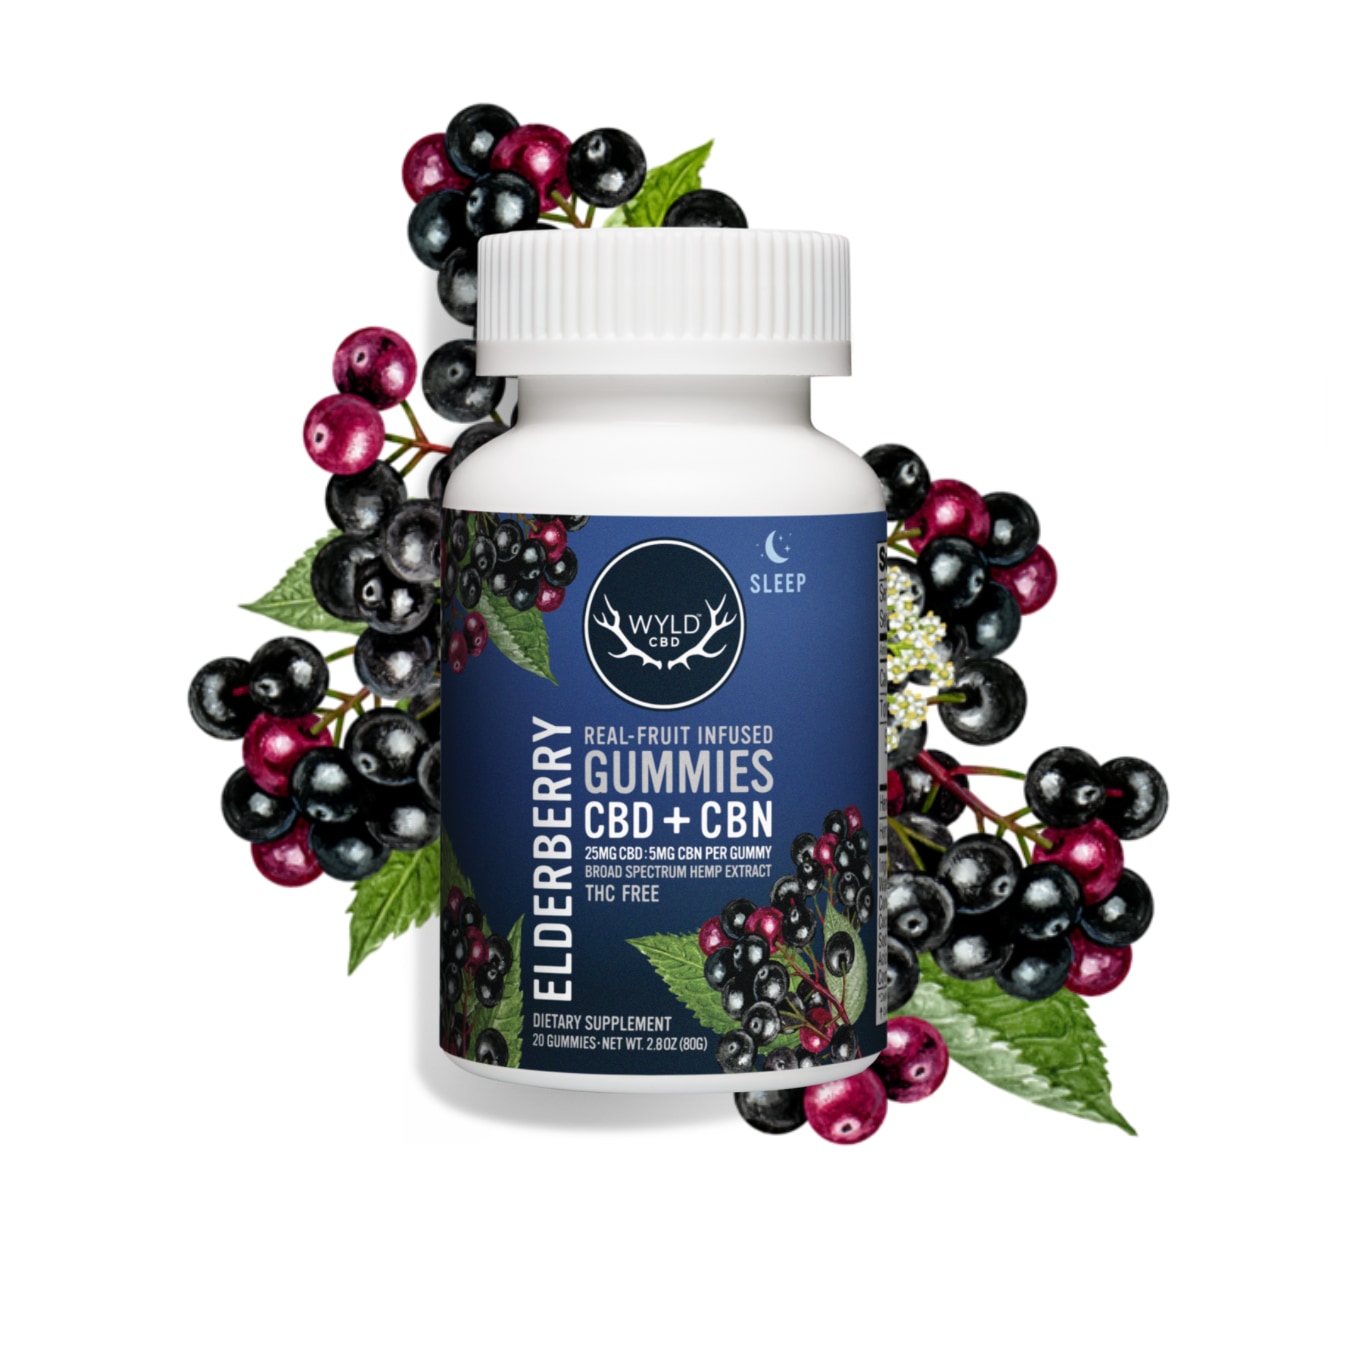 Wyld CBD, Elderberry Gummies, Broad Spectrum THC-Free, 20ct, 100mg CBN + 500mg CBD